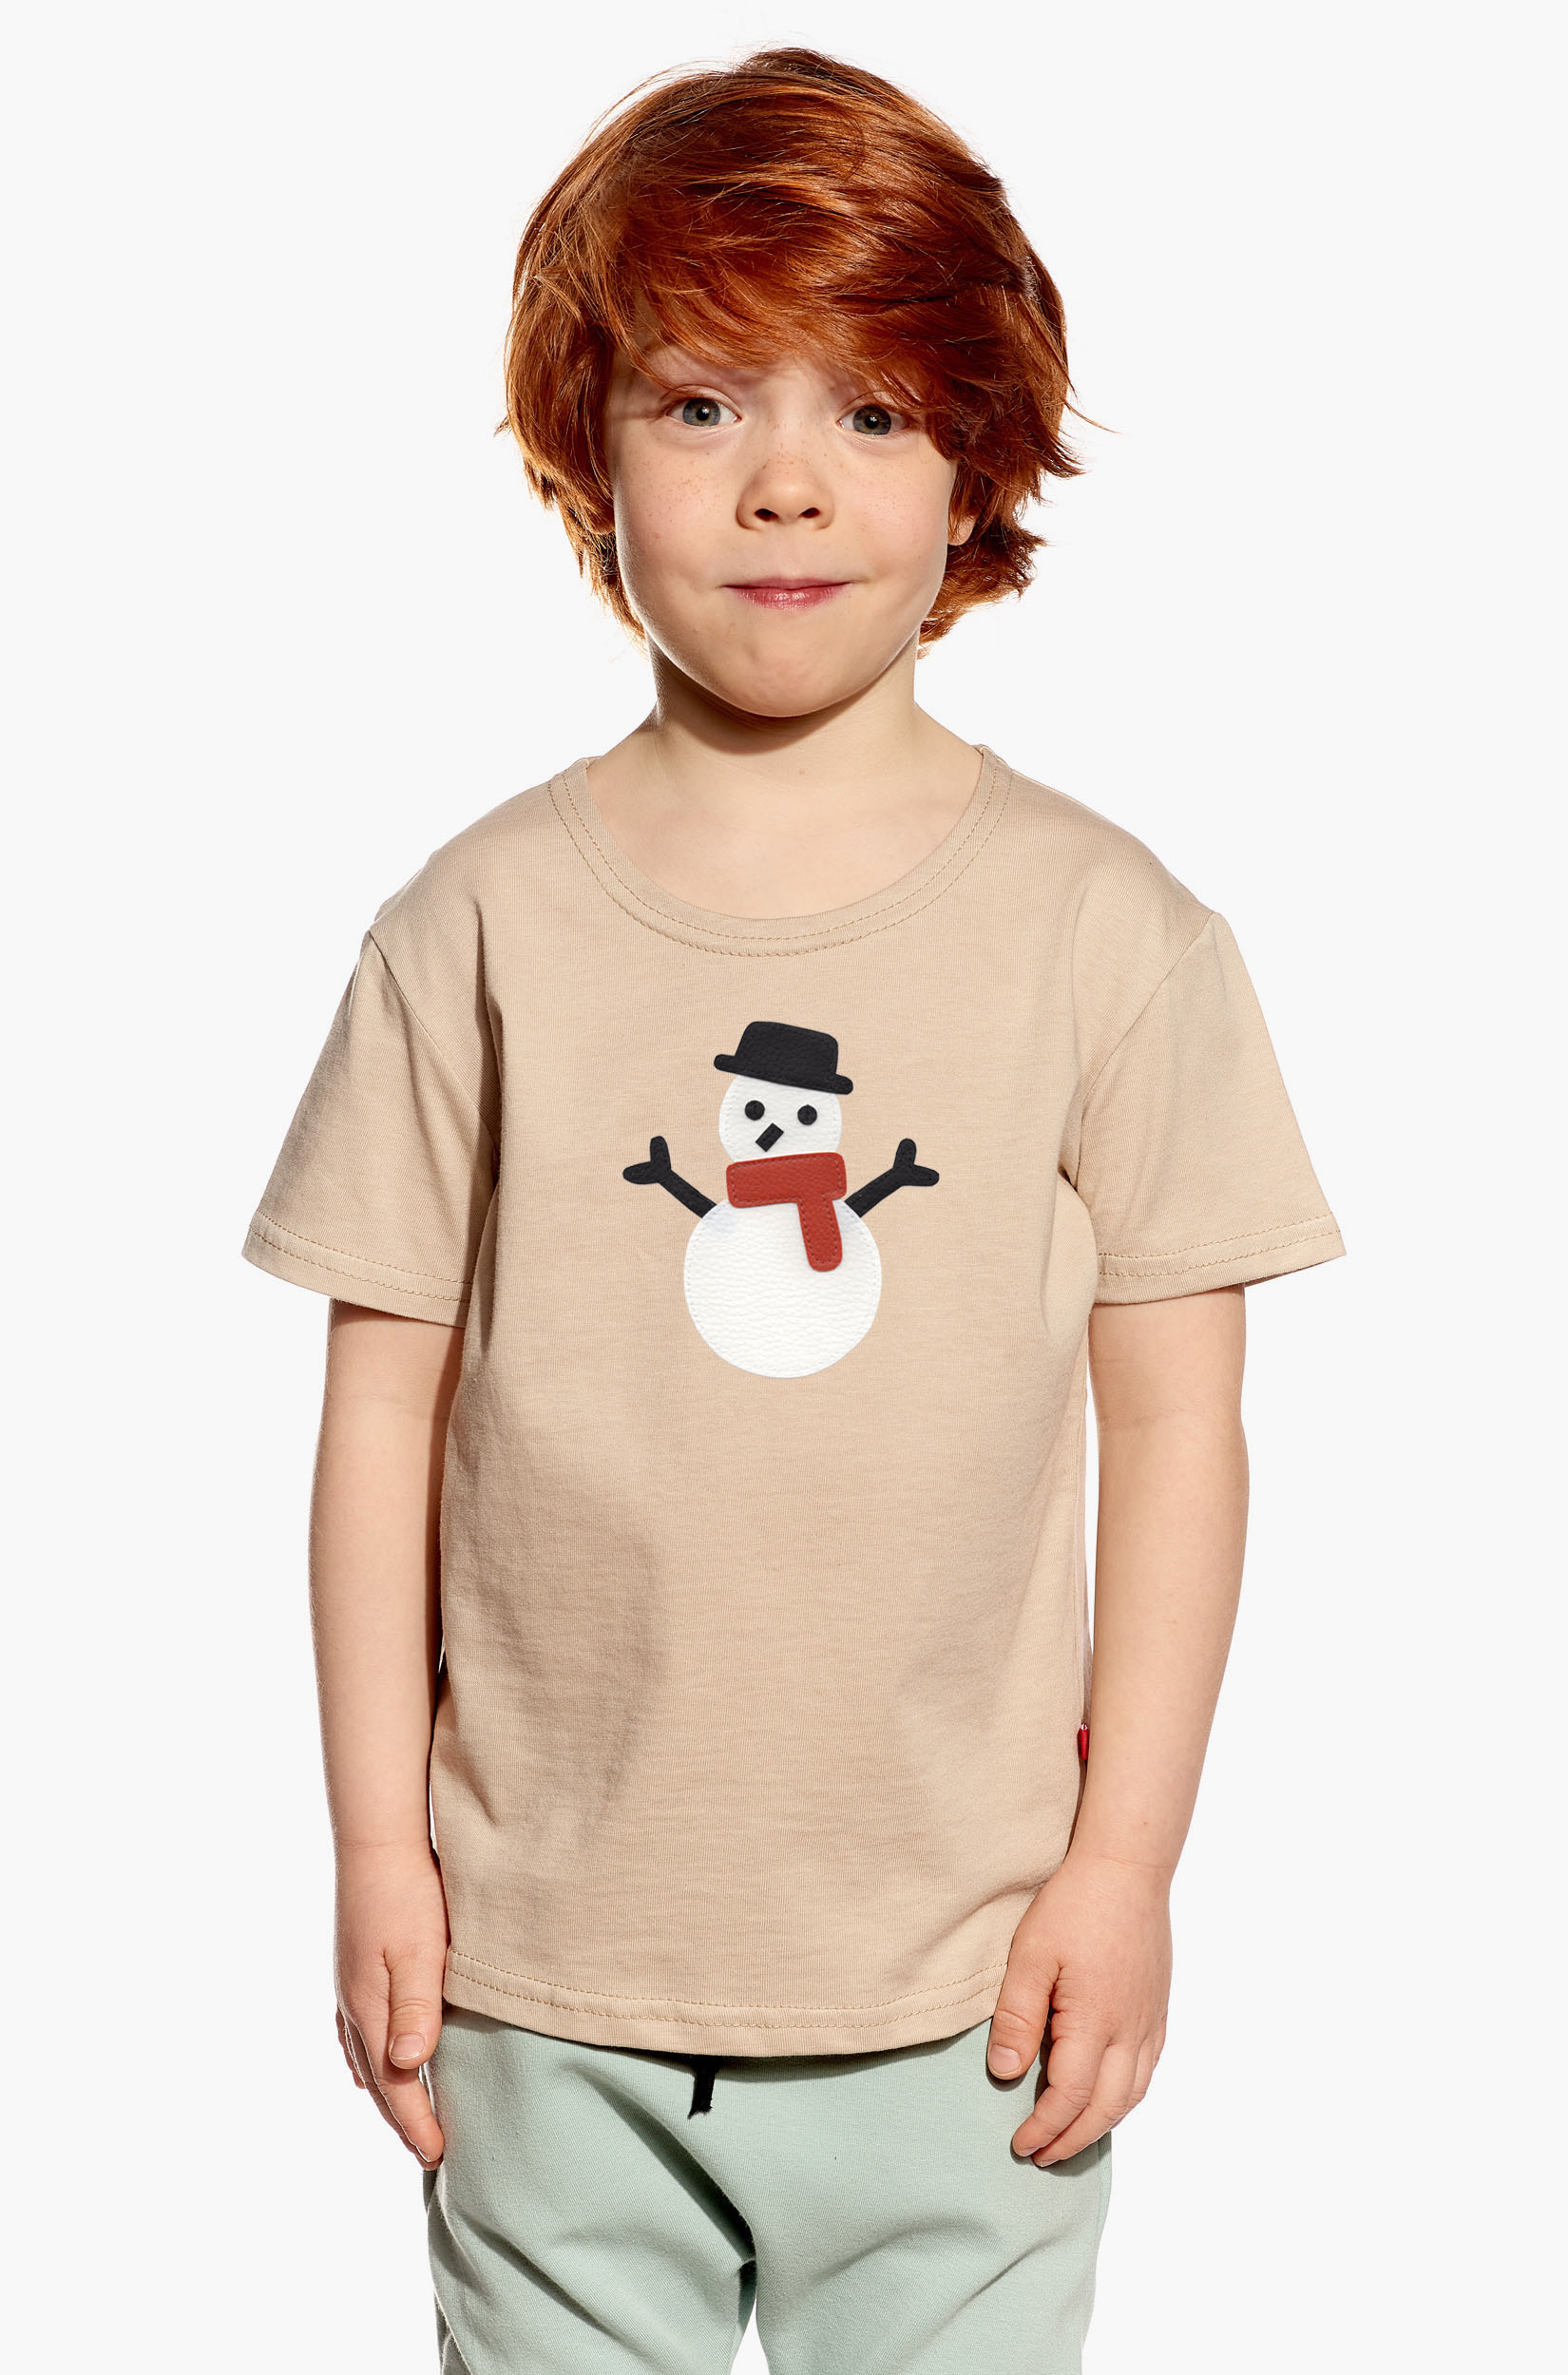 Shirt with a snowman